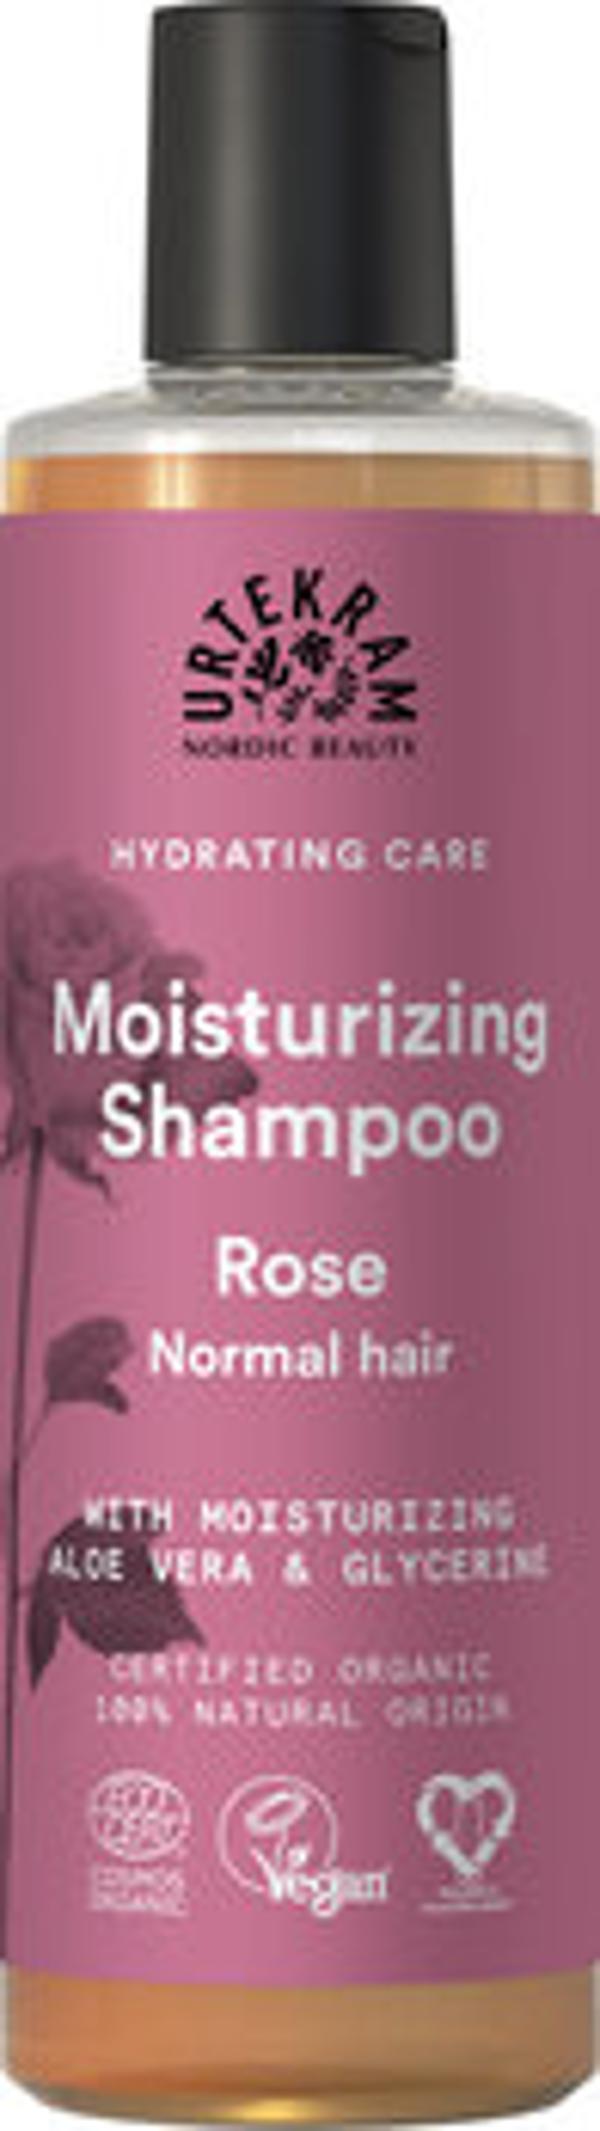 Produktfoto zu Moisturizing Shampoo Rose - 250ml